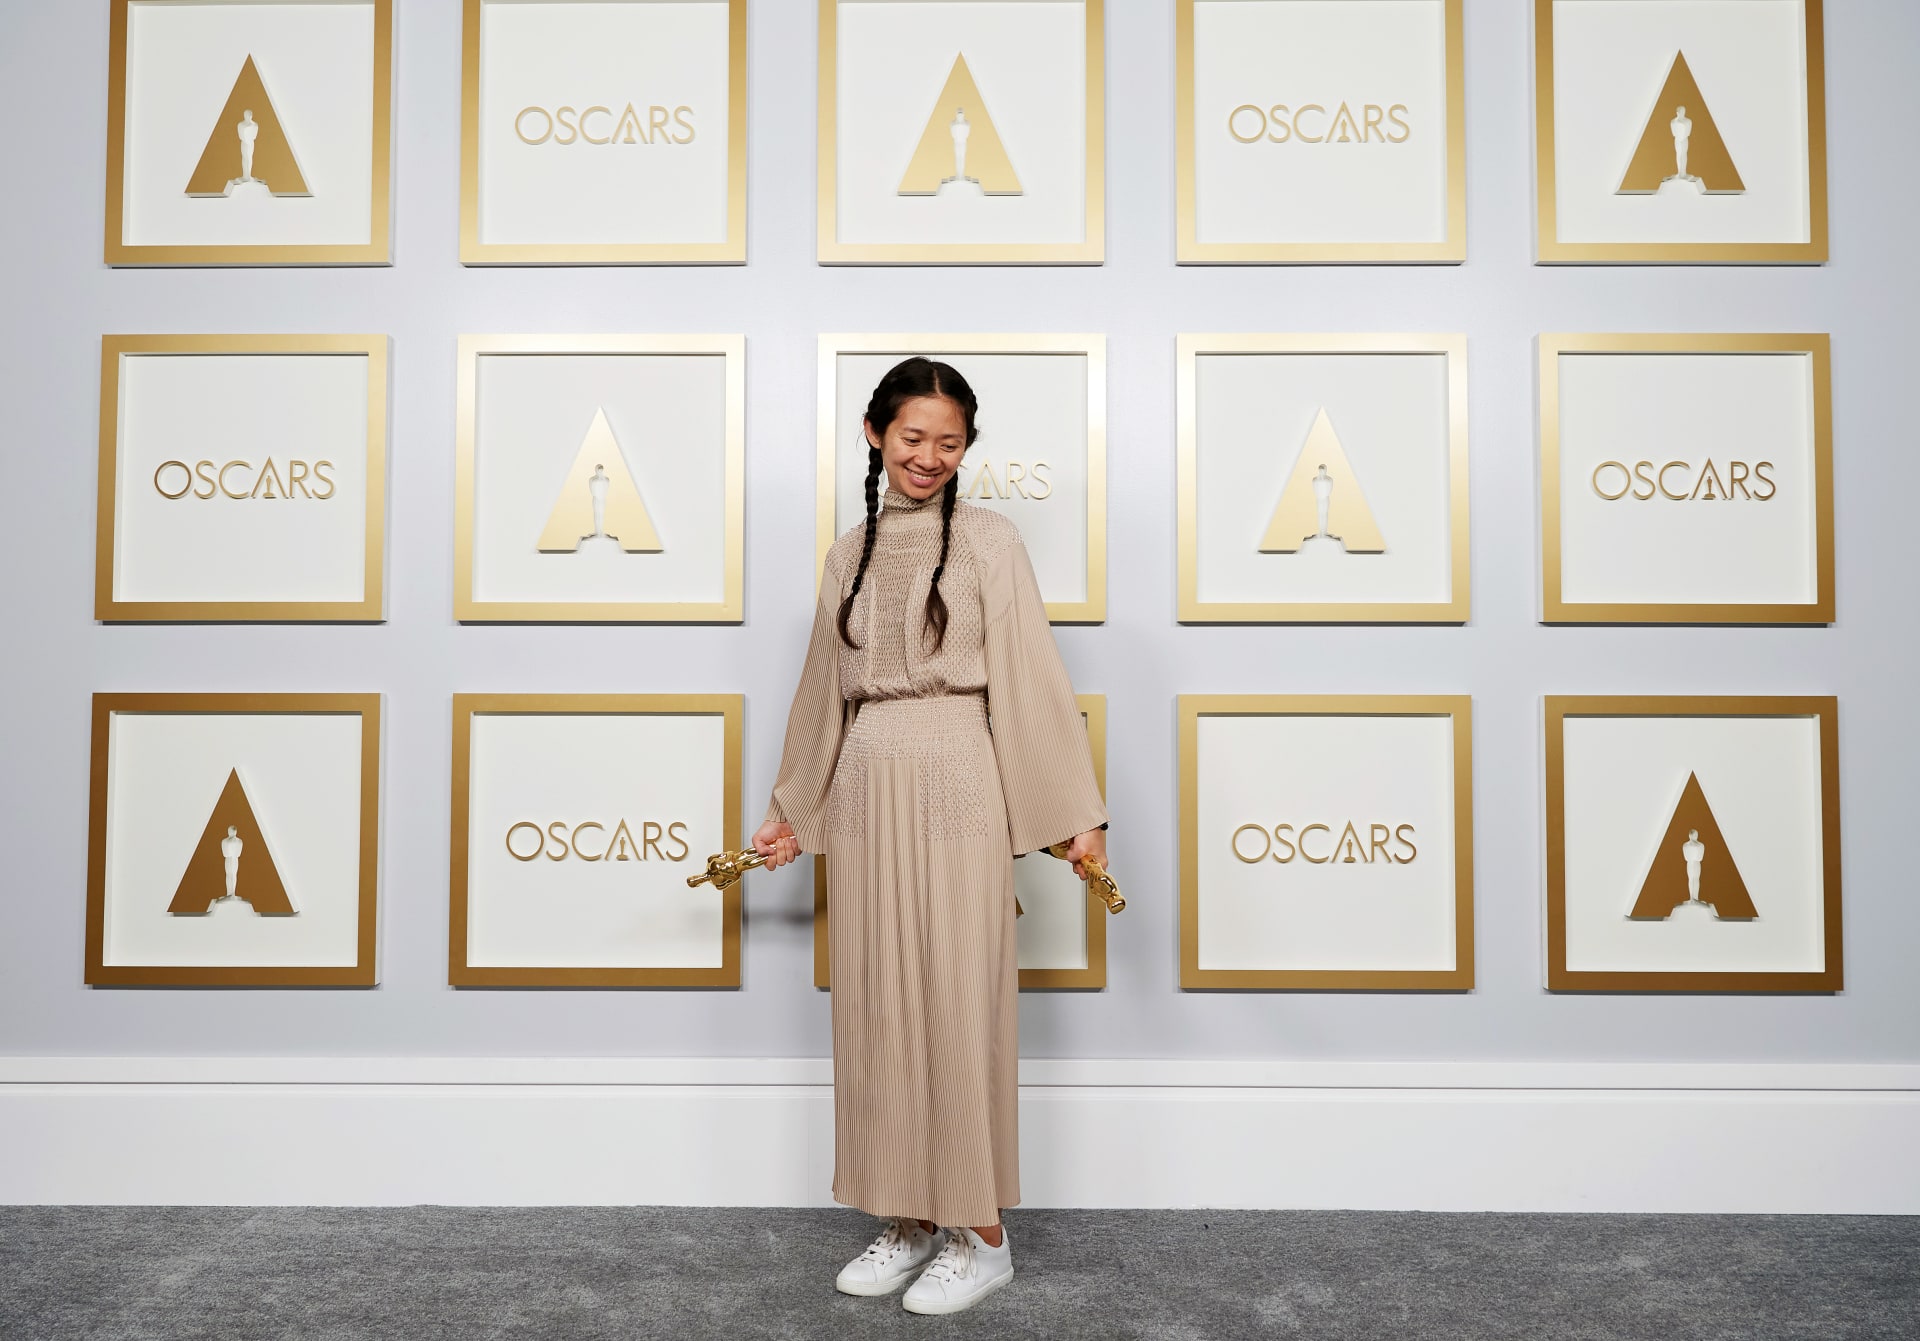 Filmařka Chloé Zhao zvolila ke své róbě jednoduché bílé tenisky. 